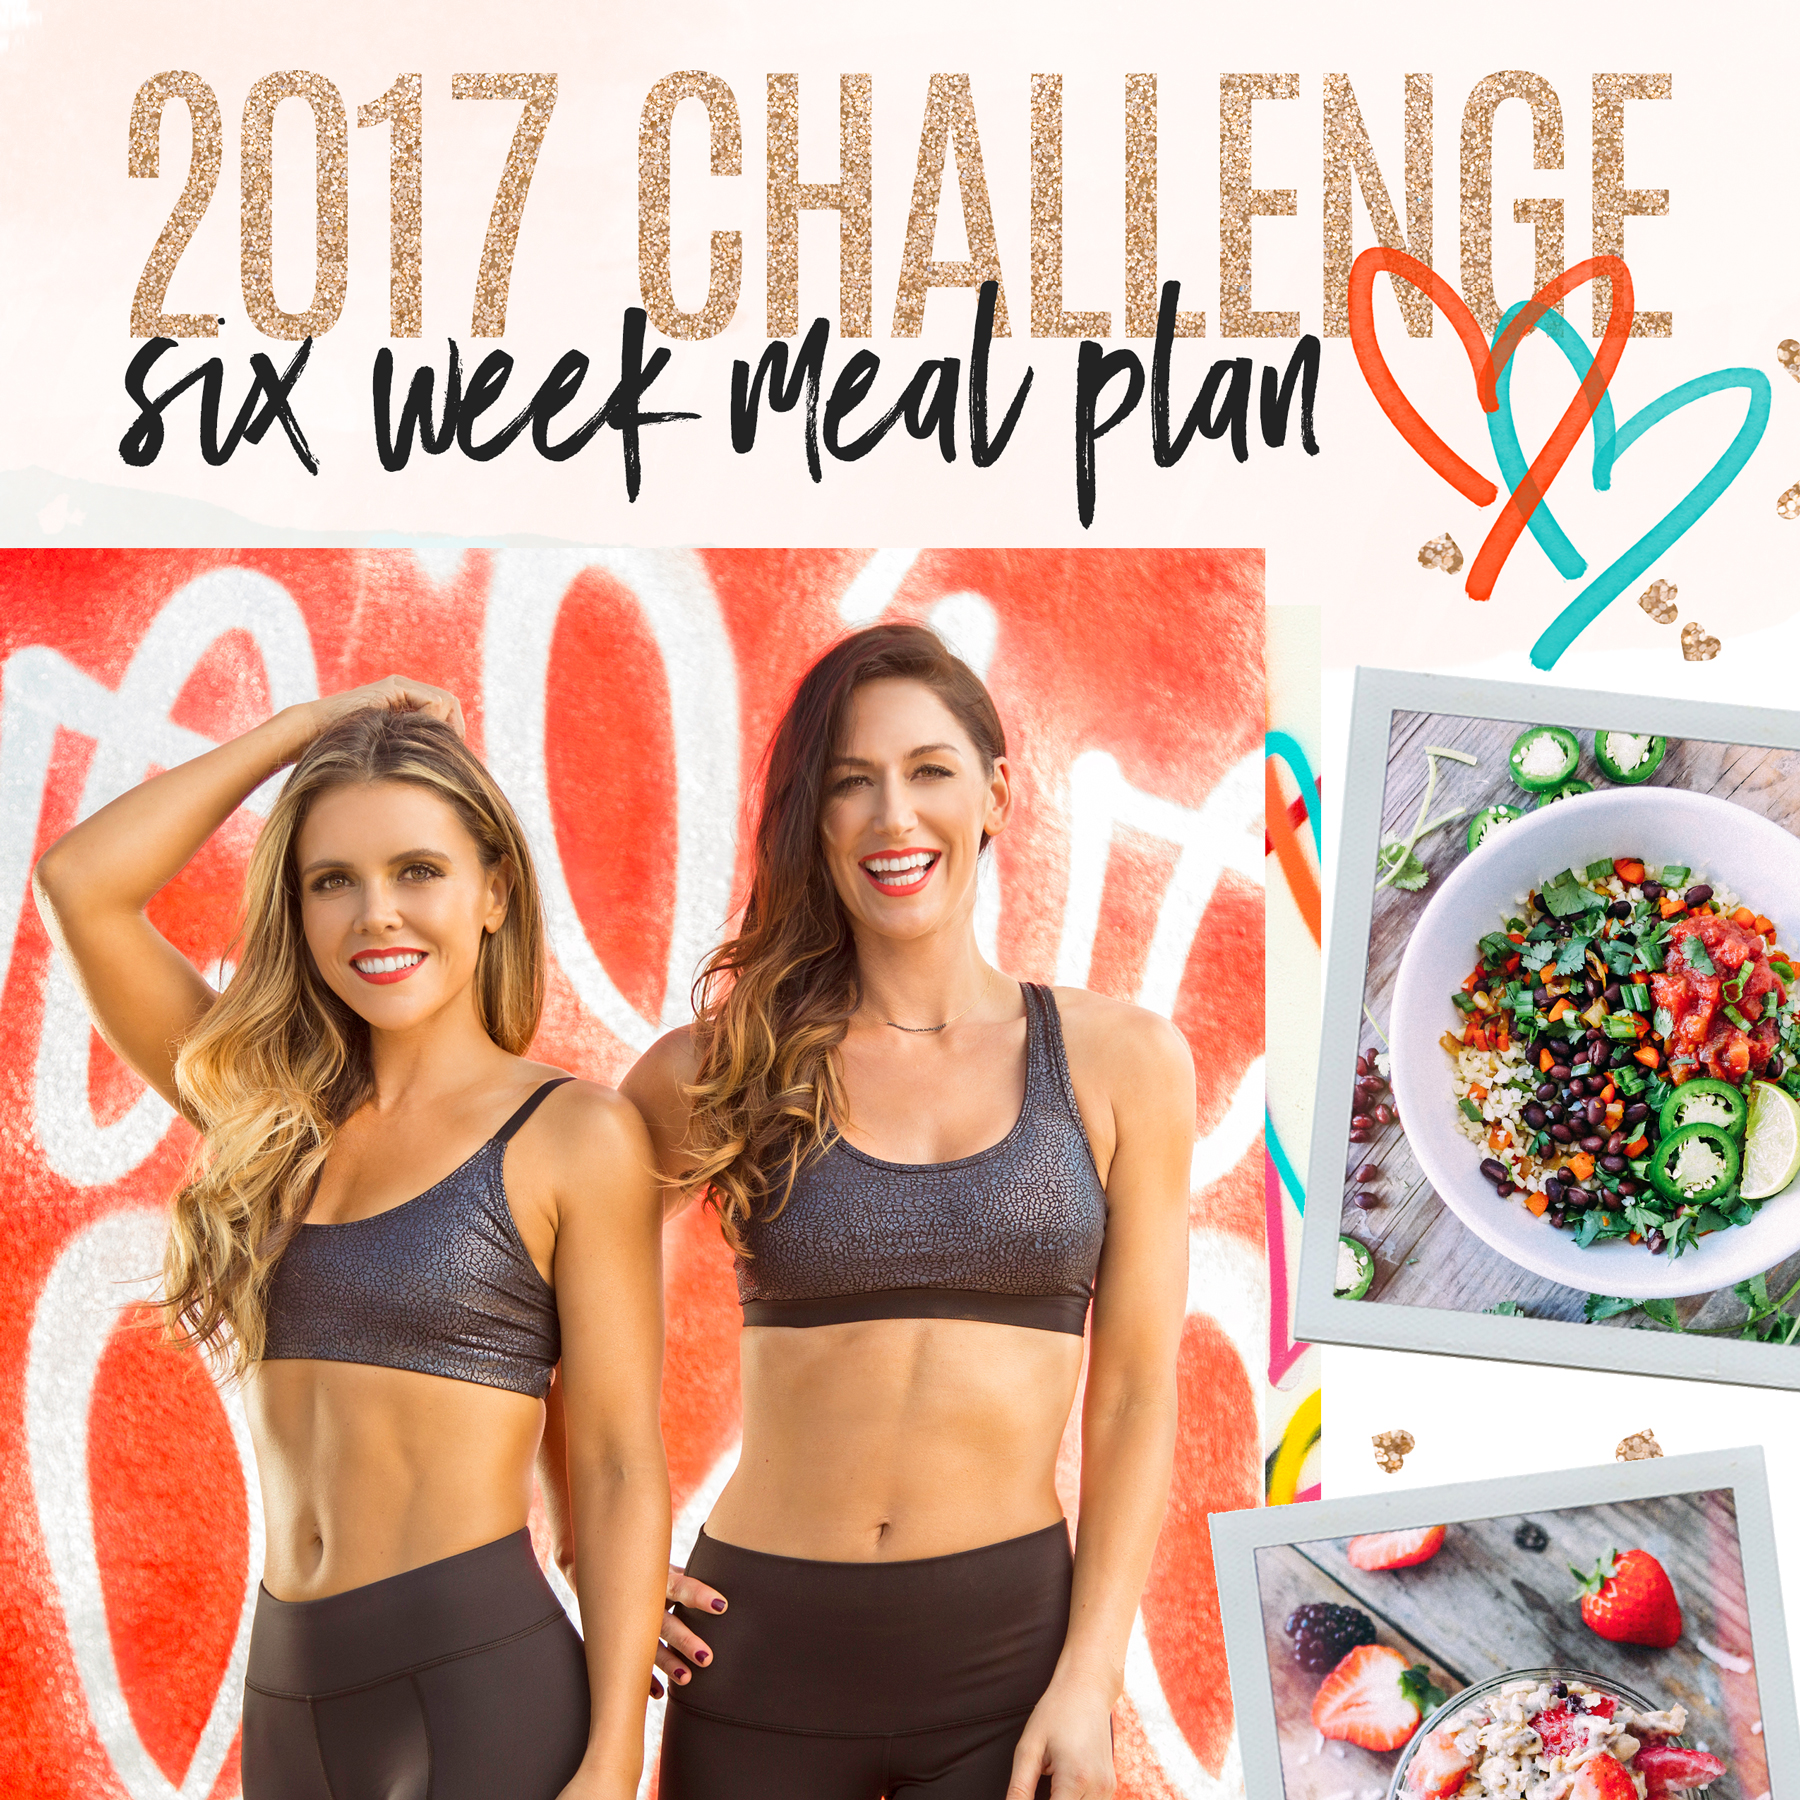 tone-it-up-6-week-meal-plan-2017-challenge